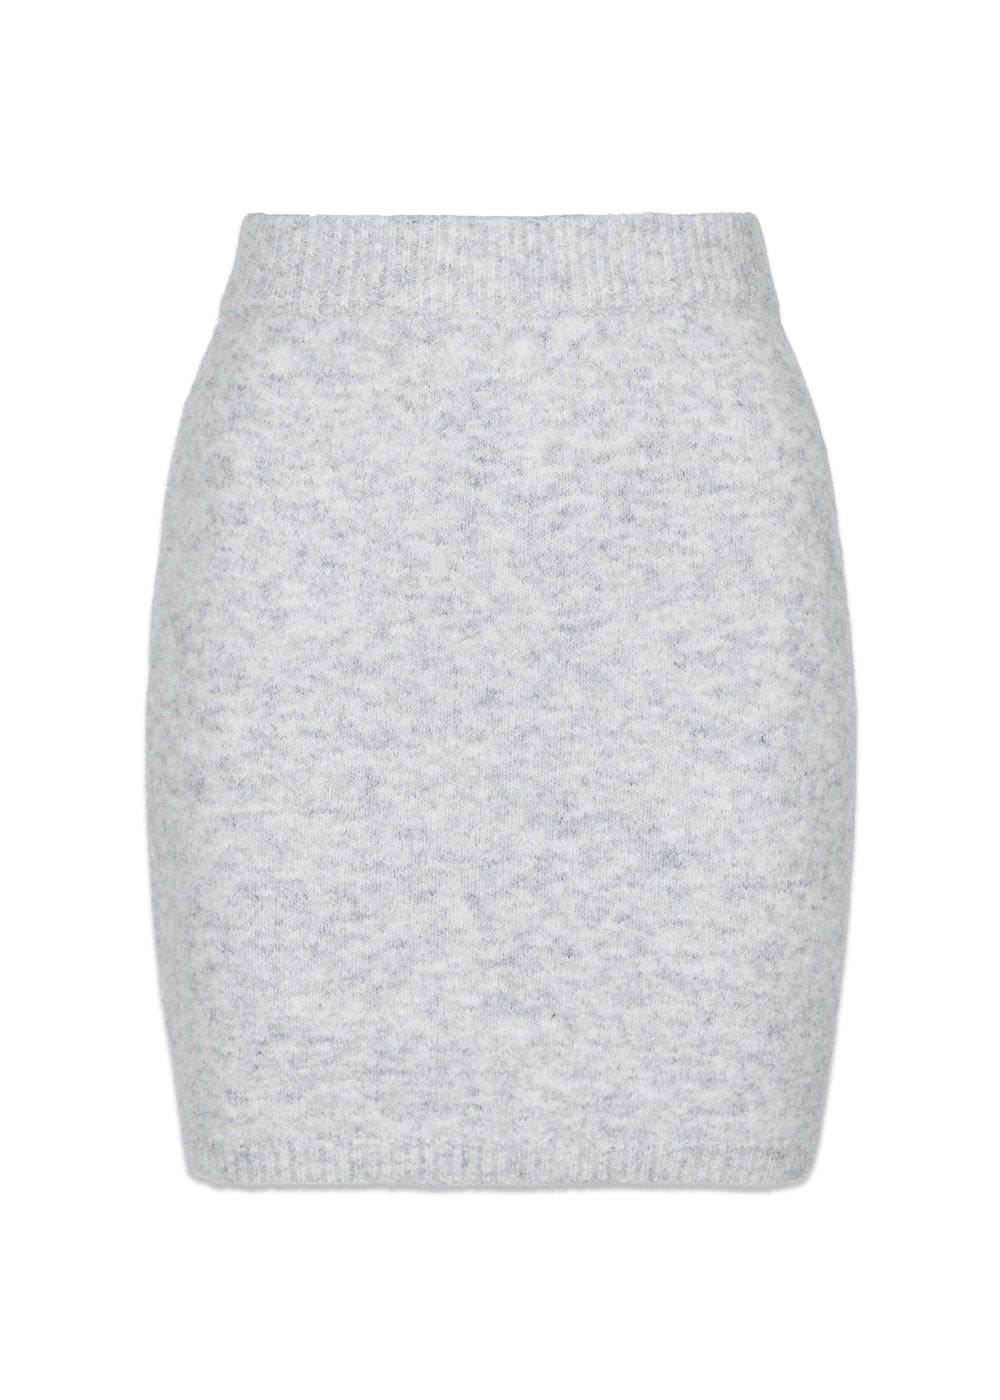 Neo Noirs Marie Knit Skirt - Light Grey Melange. Køb skirts her.